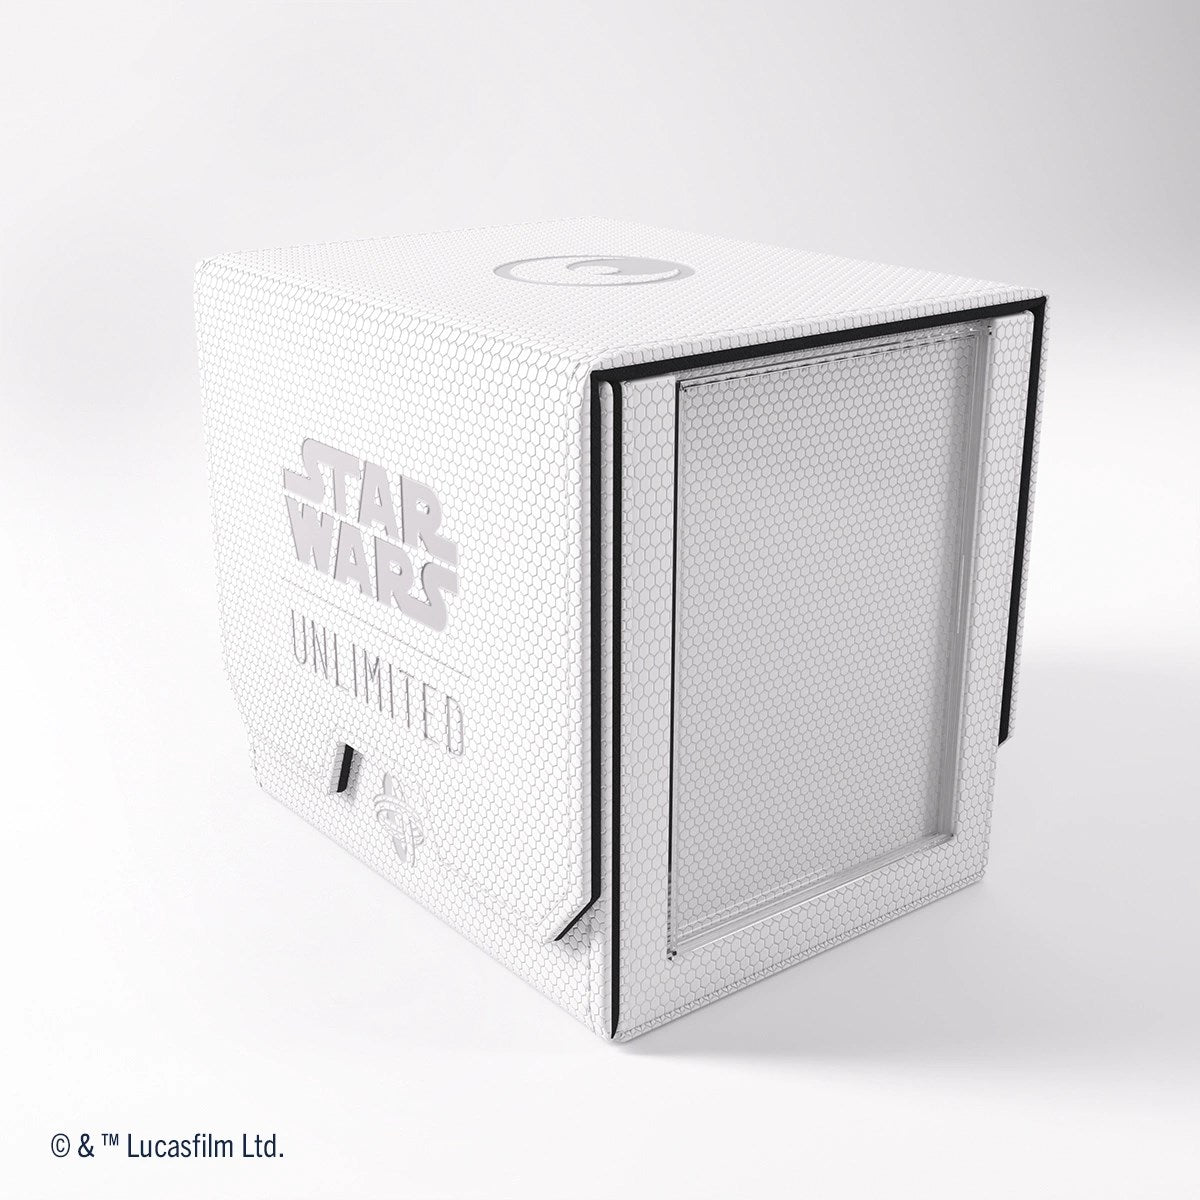 Star Wars: Unlimited Deck Pod (White/Black)